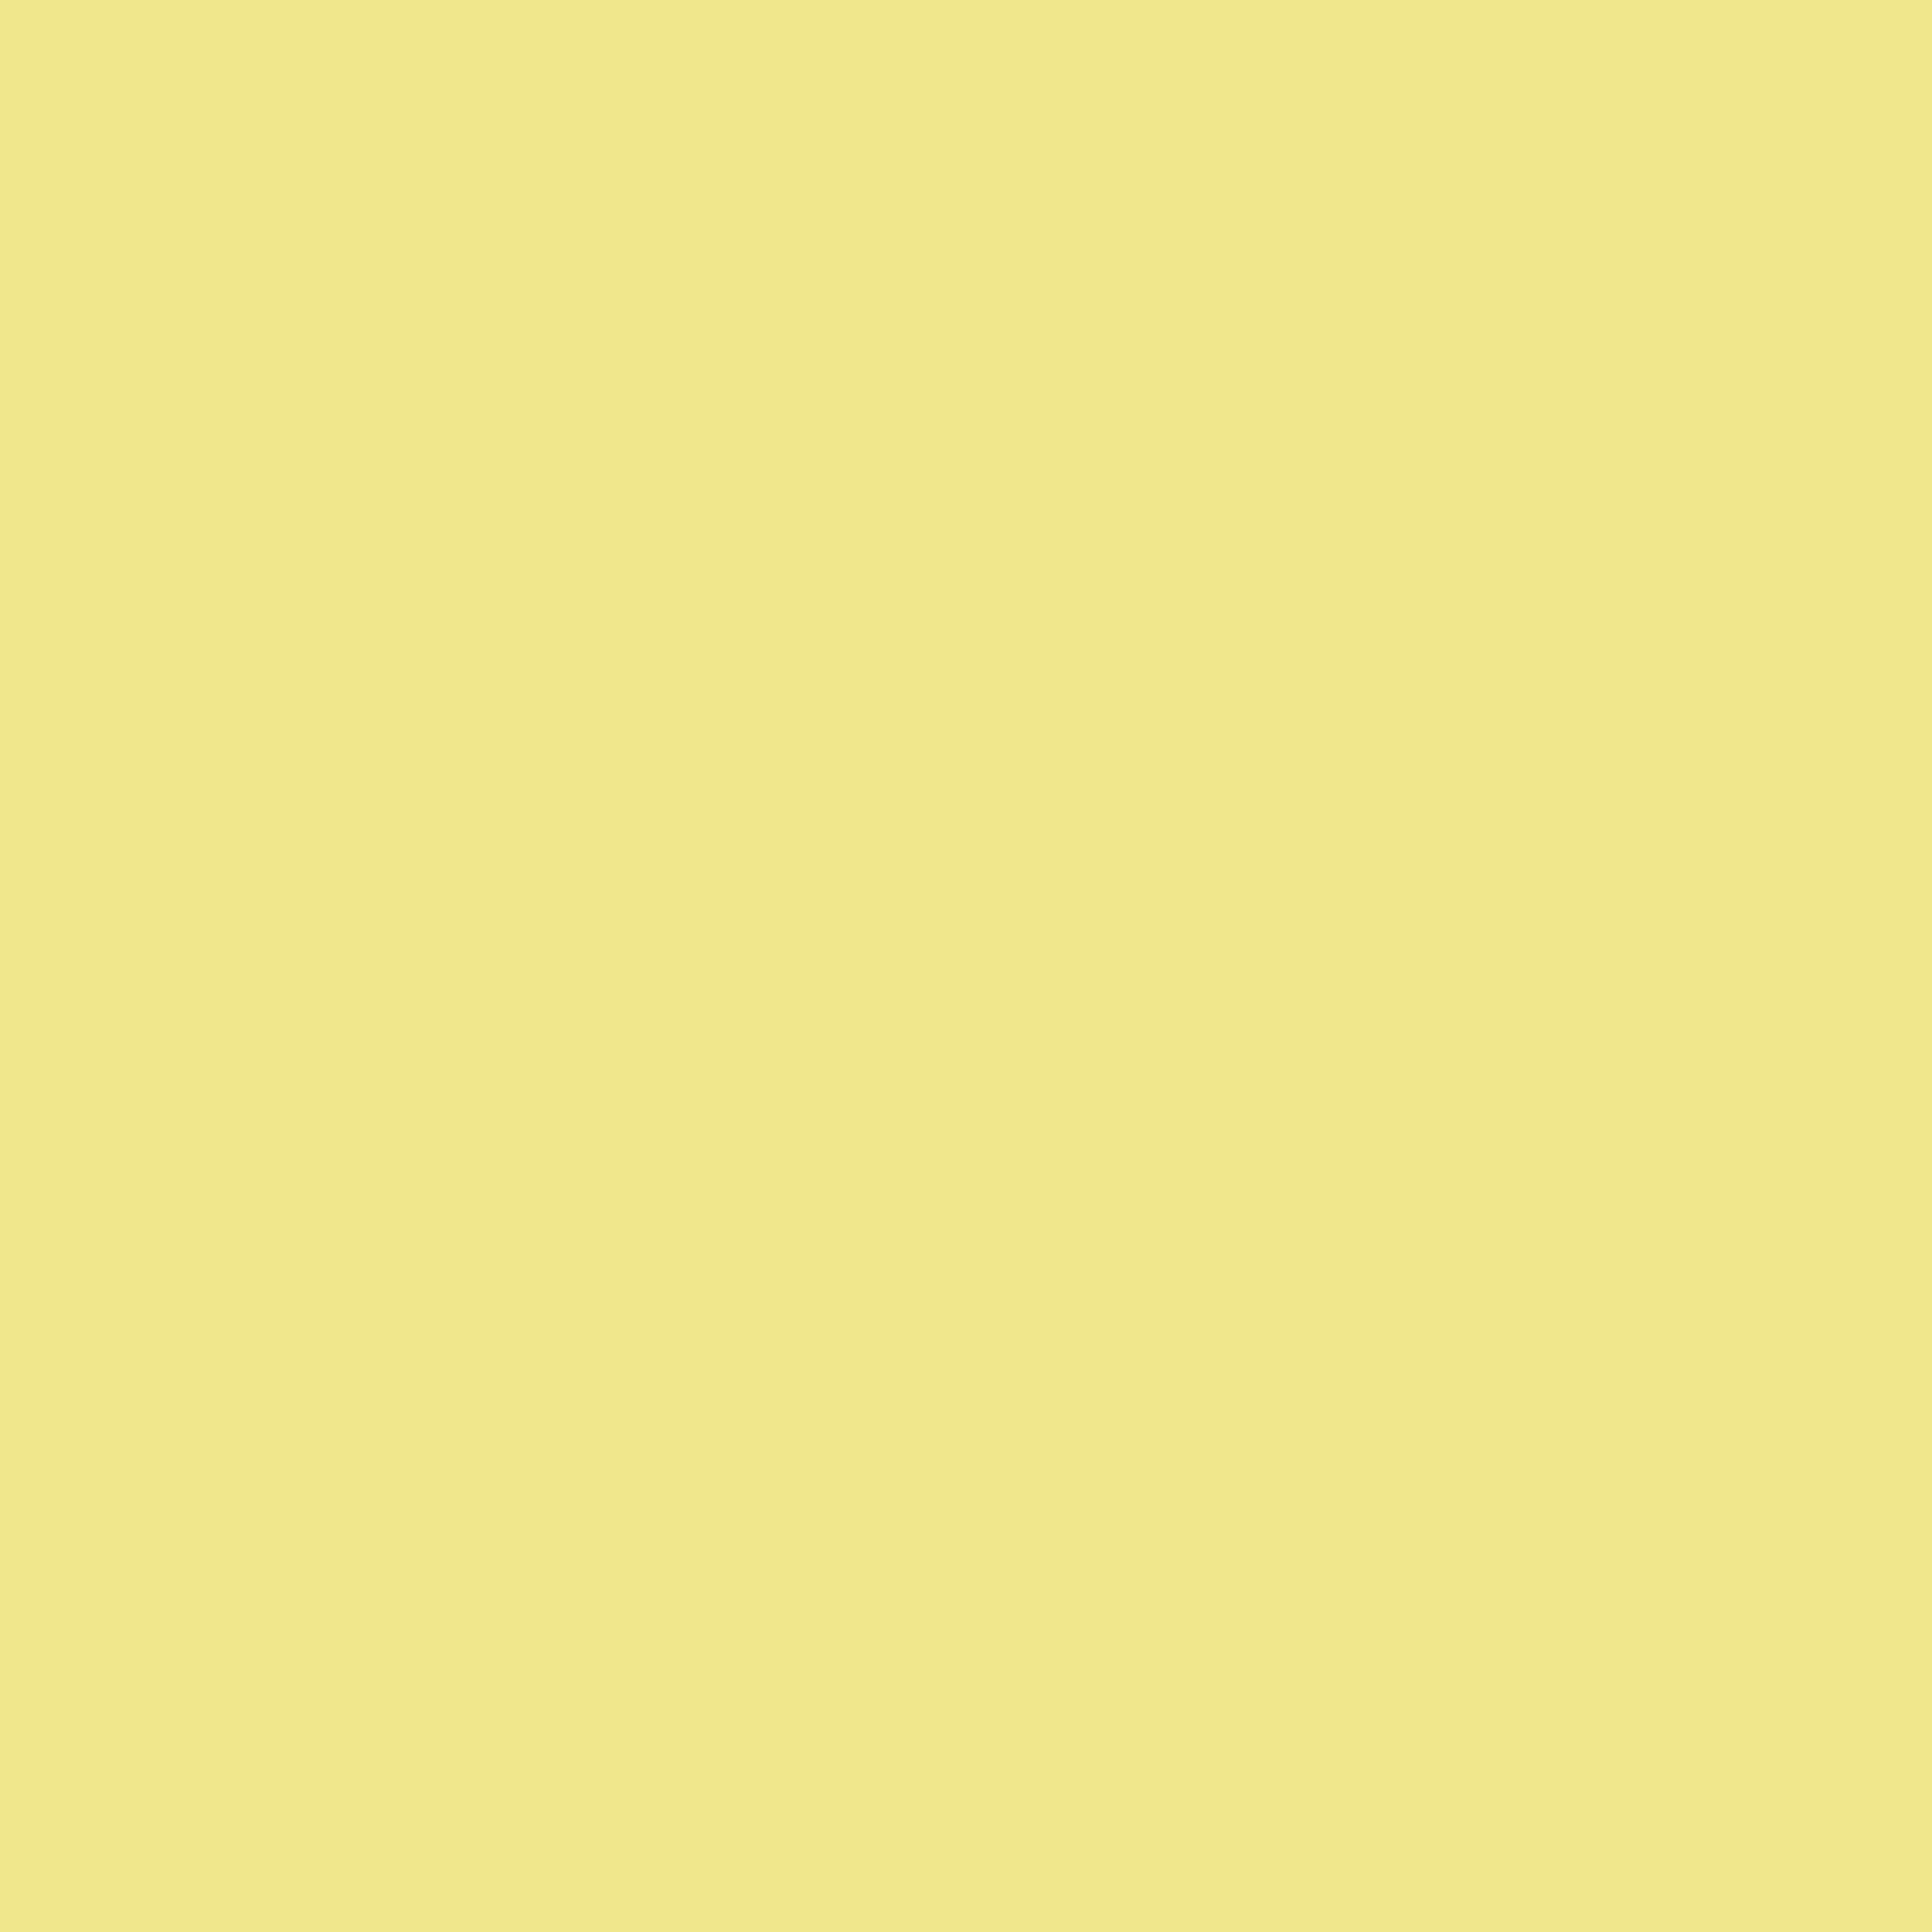 2732x2732 Light Khaki Solid Color Background